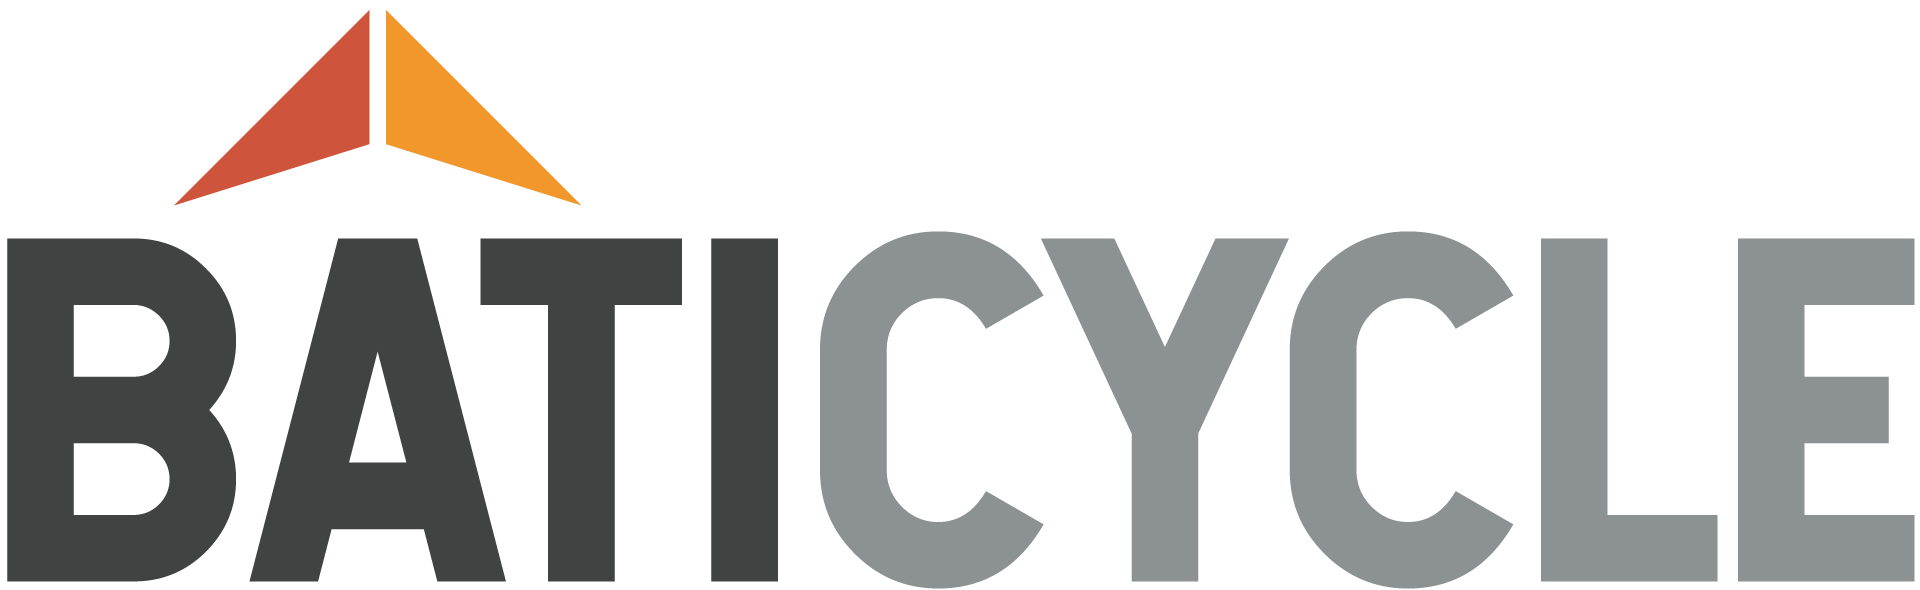 tricycle-environnement-logo-baticycle-hd